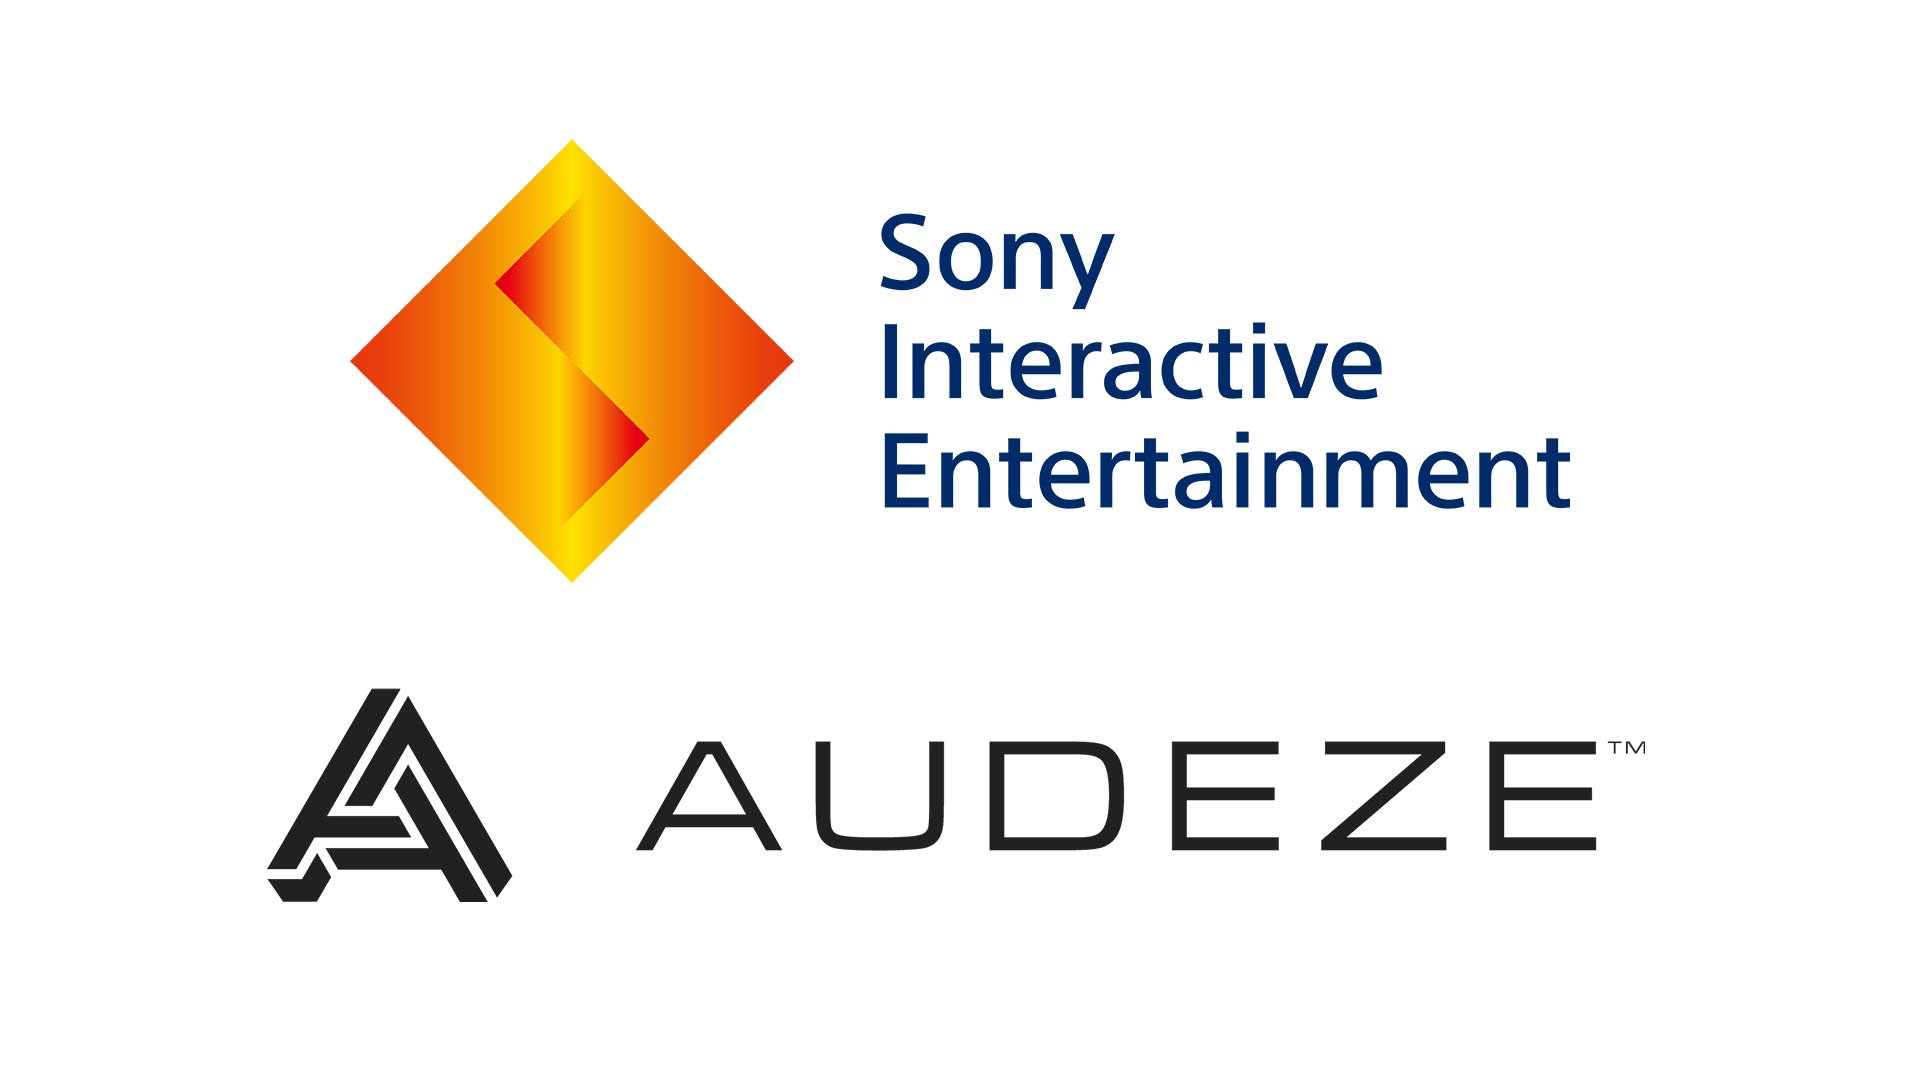 Sony Interactive Entertainment to Acquire Audeze